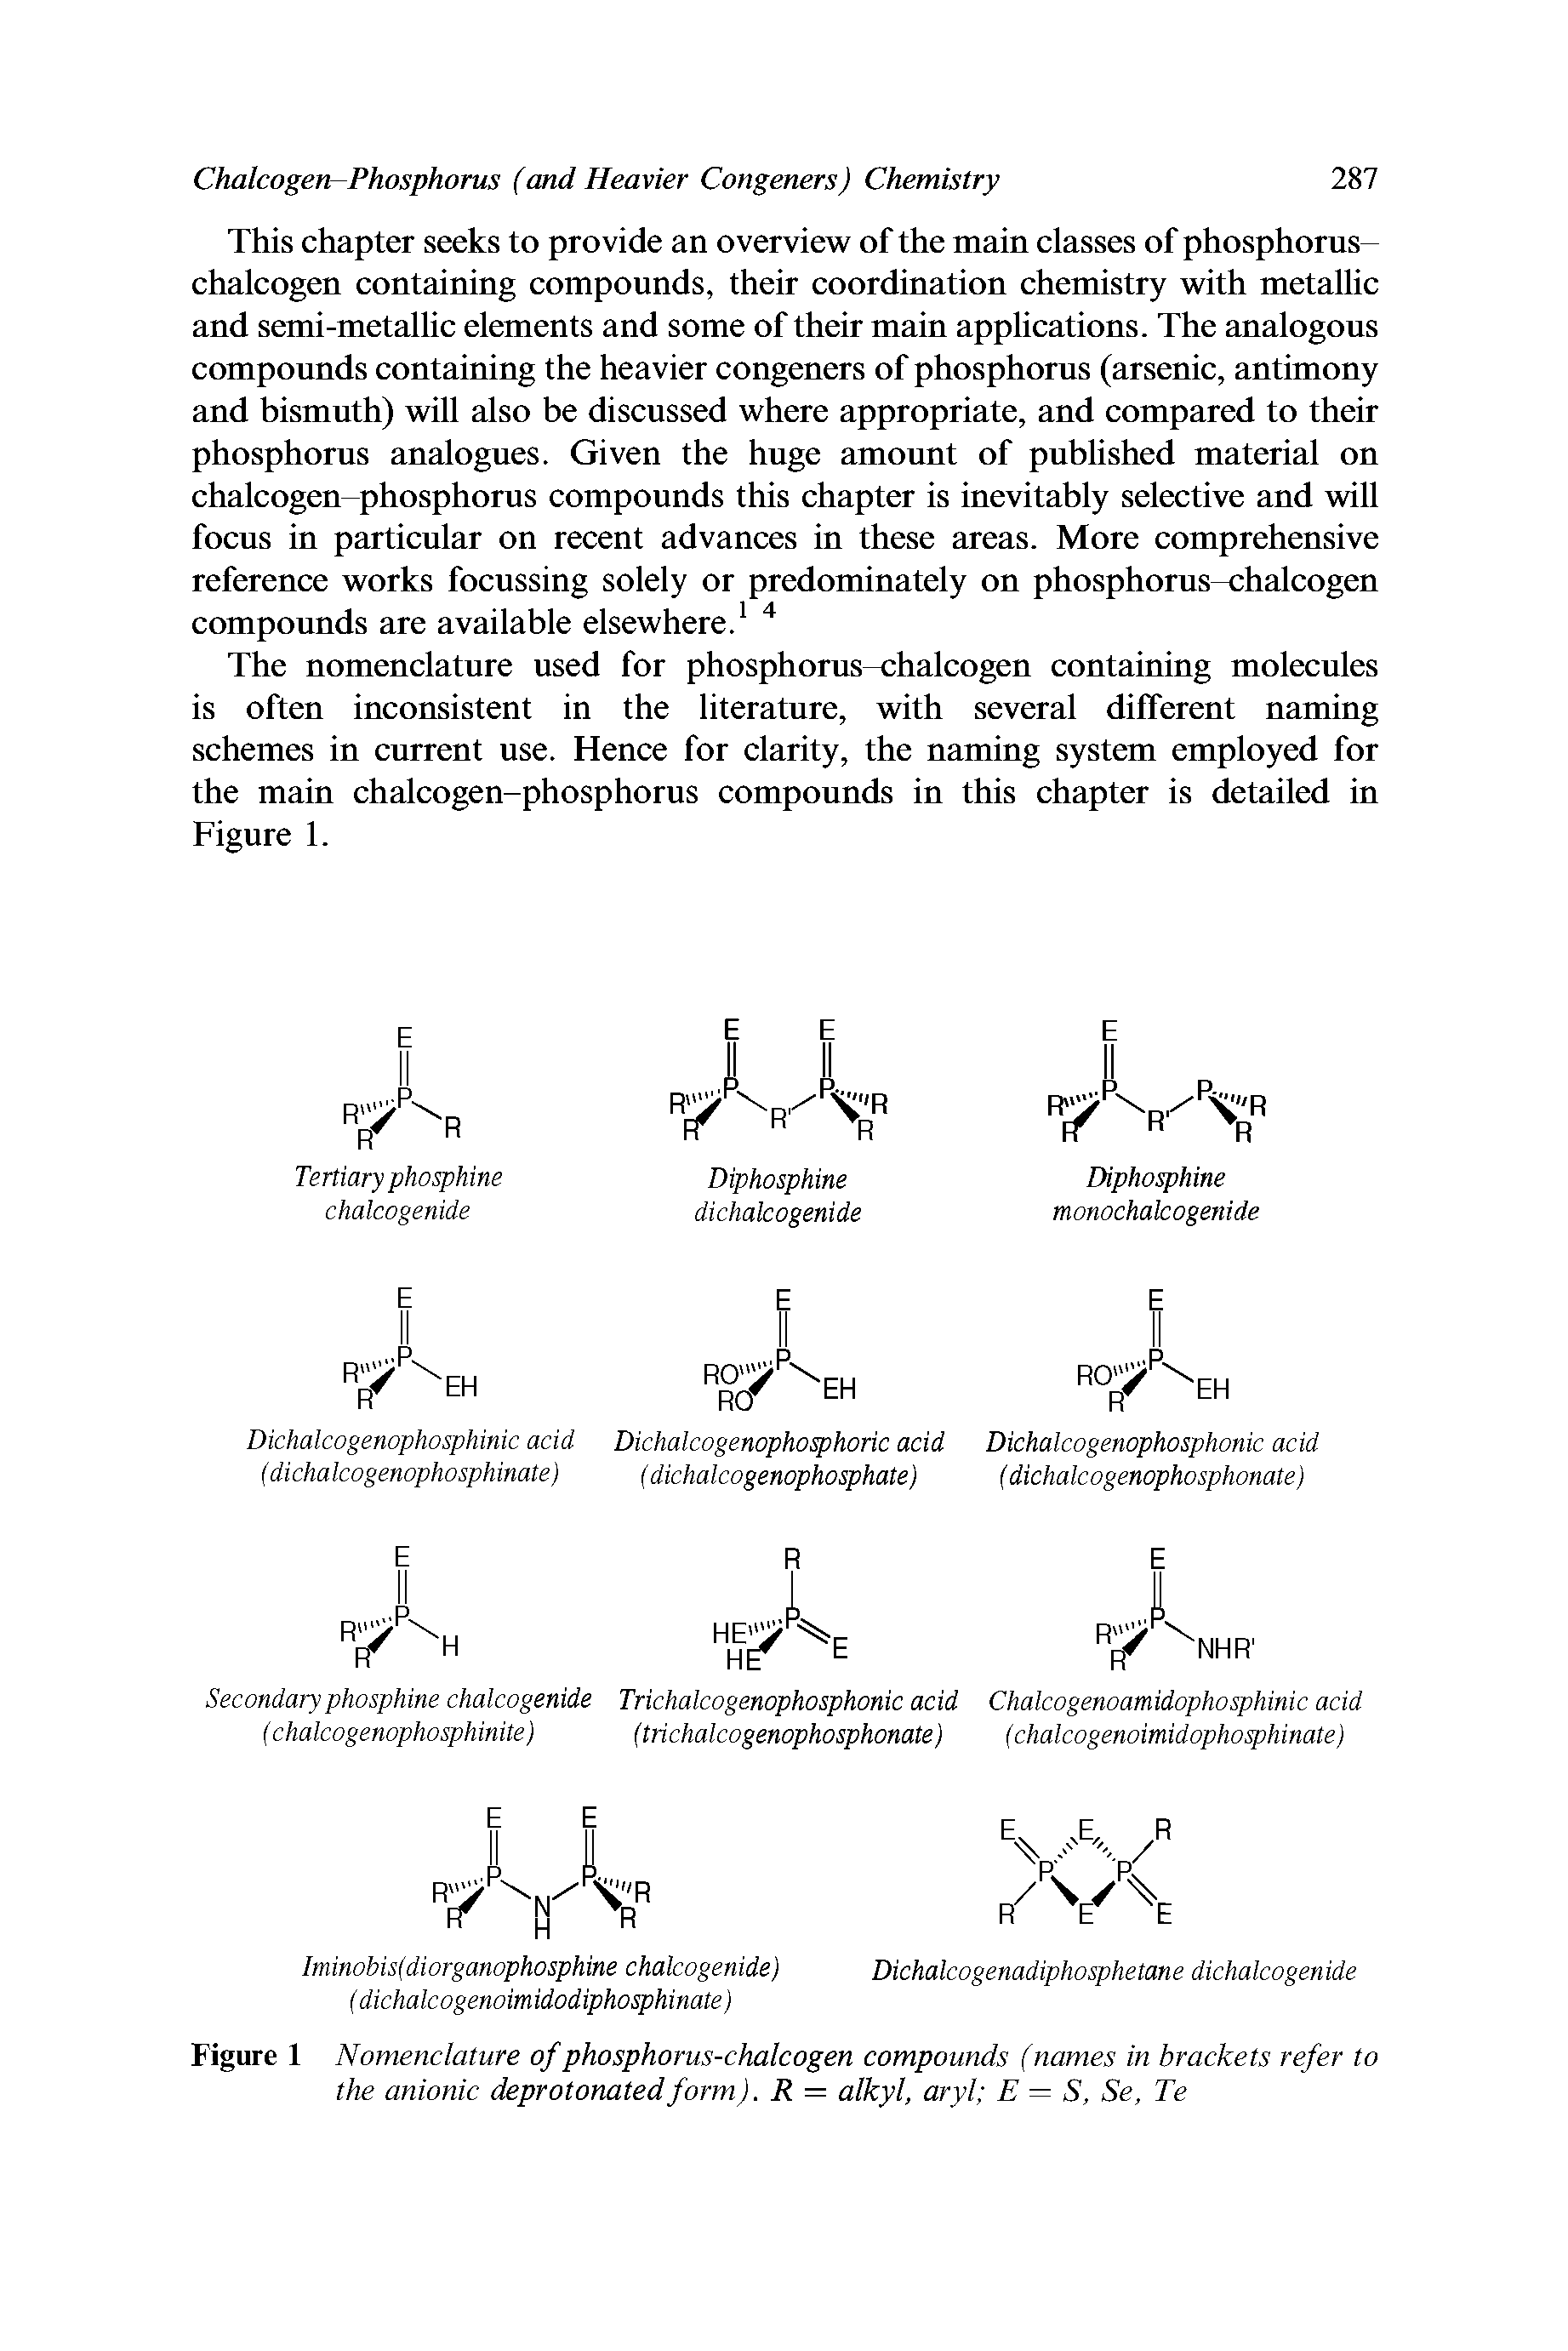 Figure 1 Nomenclature of phosphorus-chalcogen compounds (names in brackets refer to the anionic deprotonatedform). R = alkyl, aryl E — S, Se, Te...